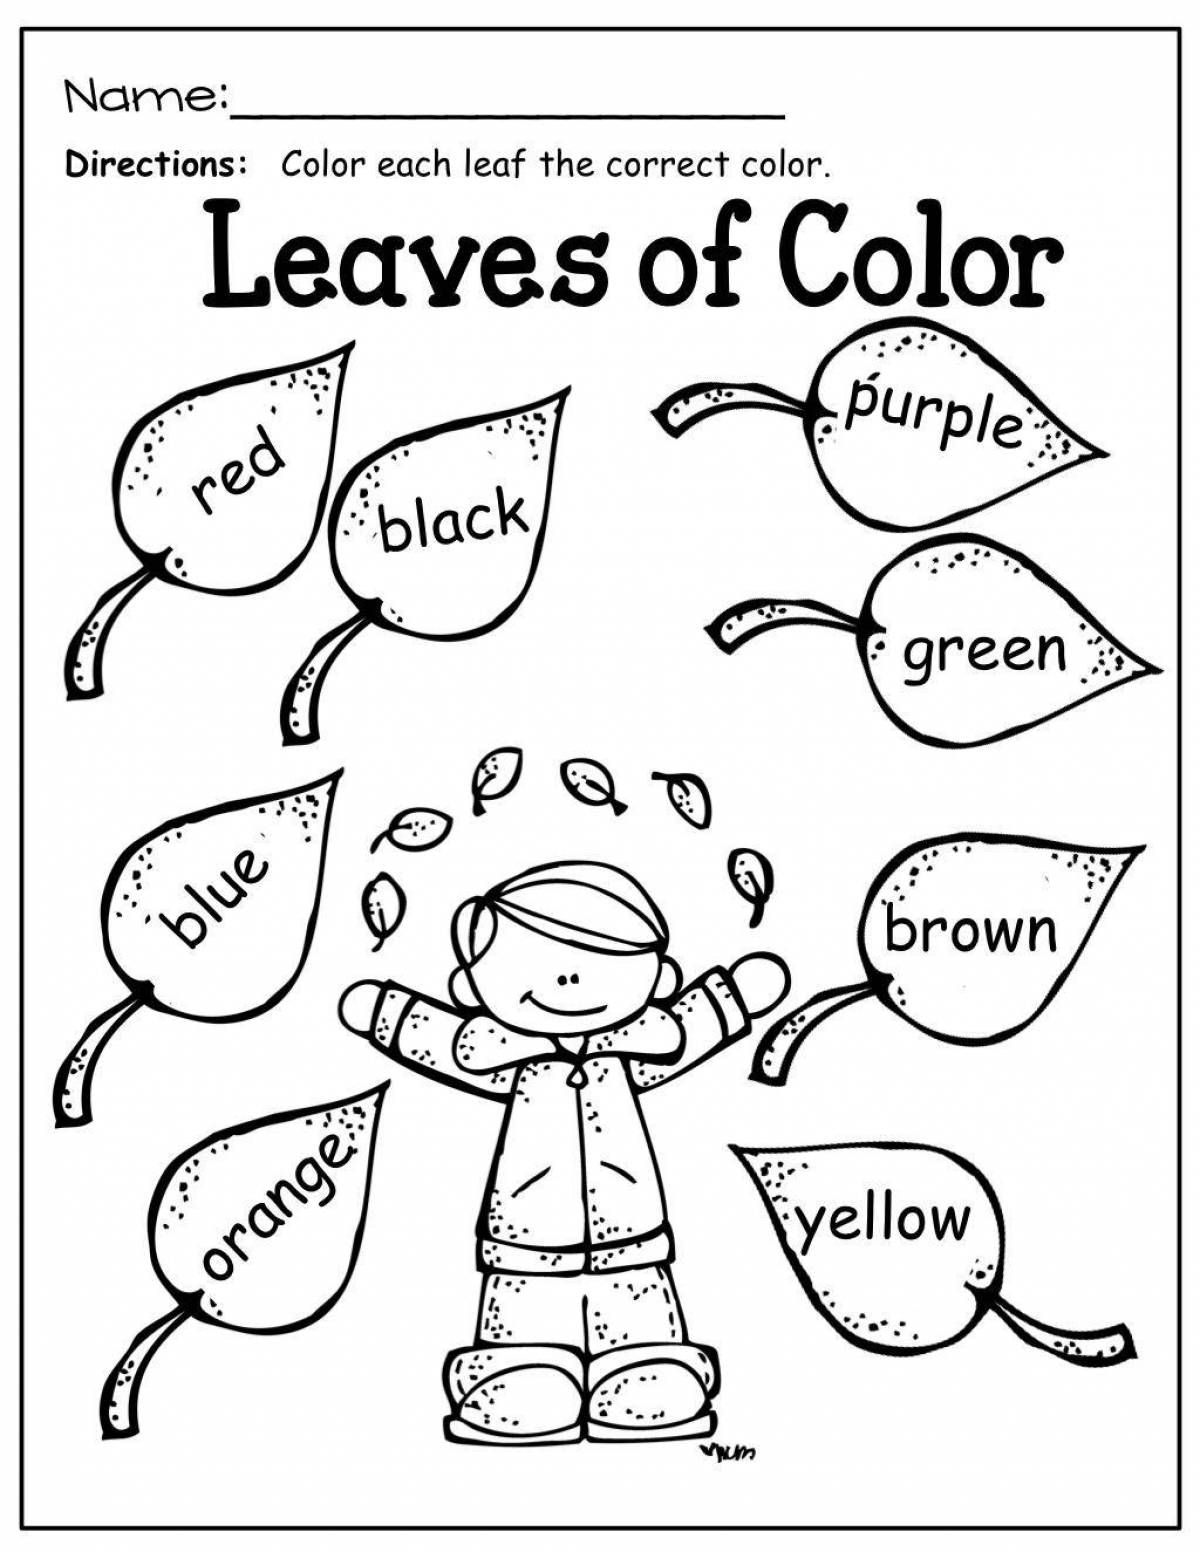 Fun coloring language for preschoolers